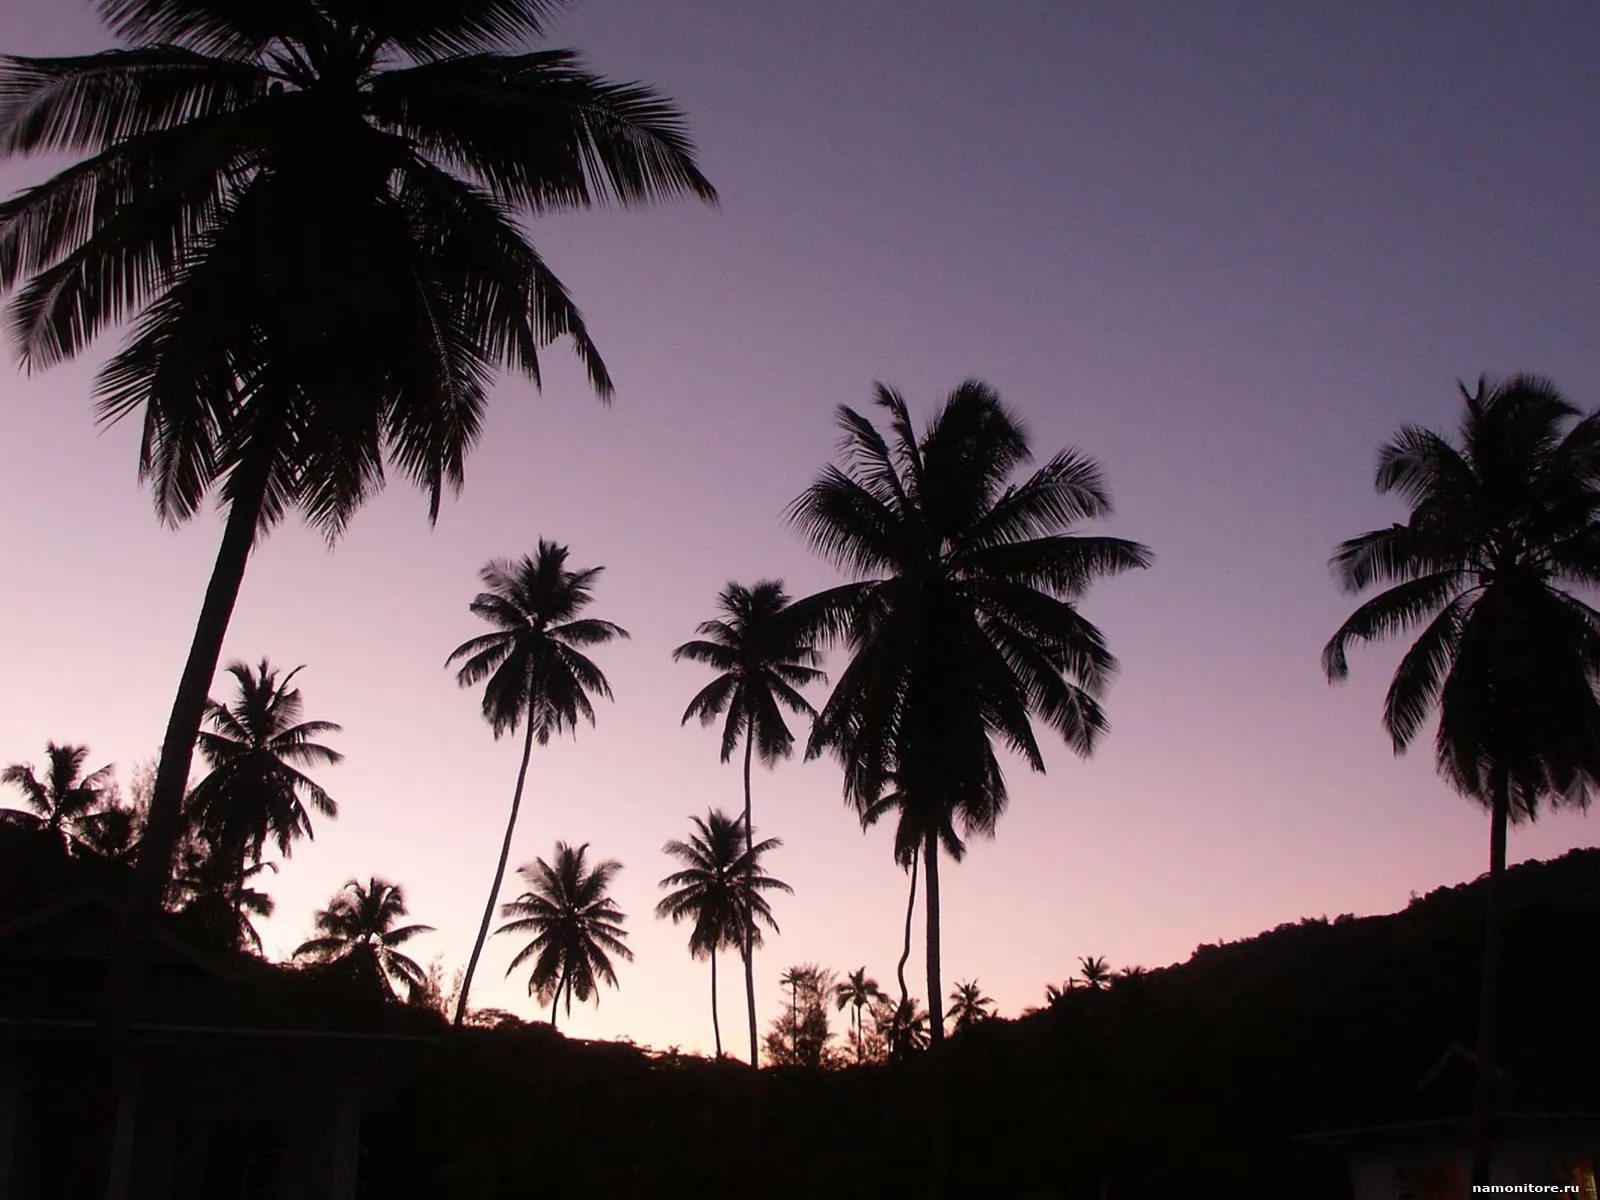 Black palm trees, nature, palm trees, tropics x